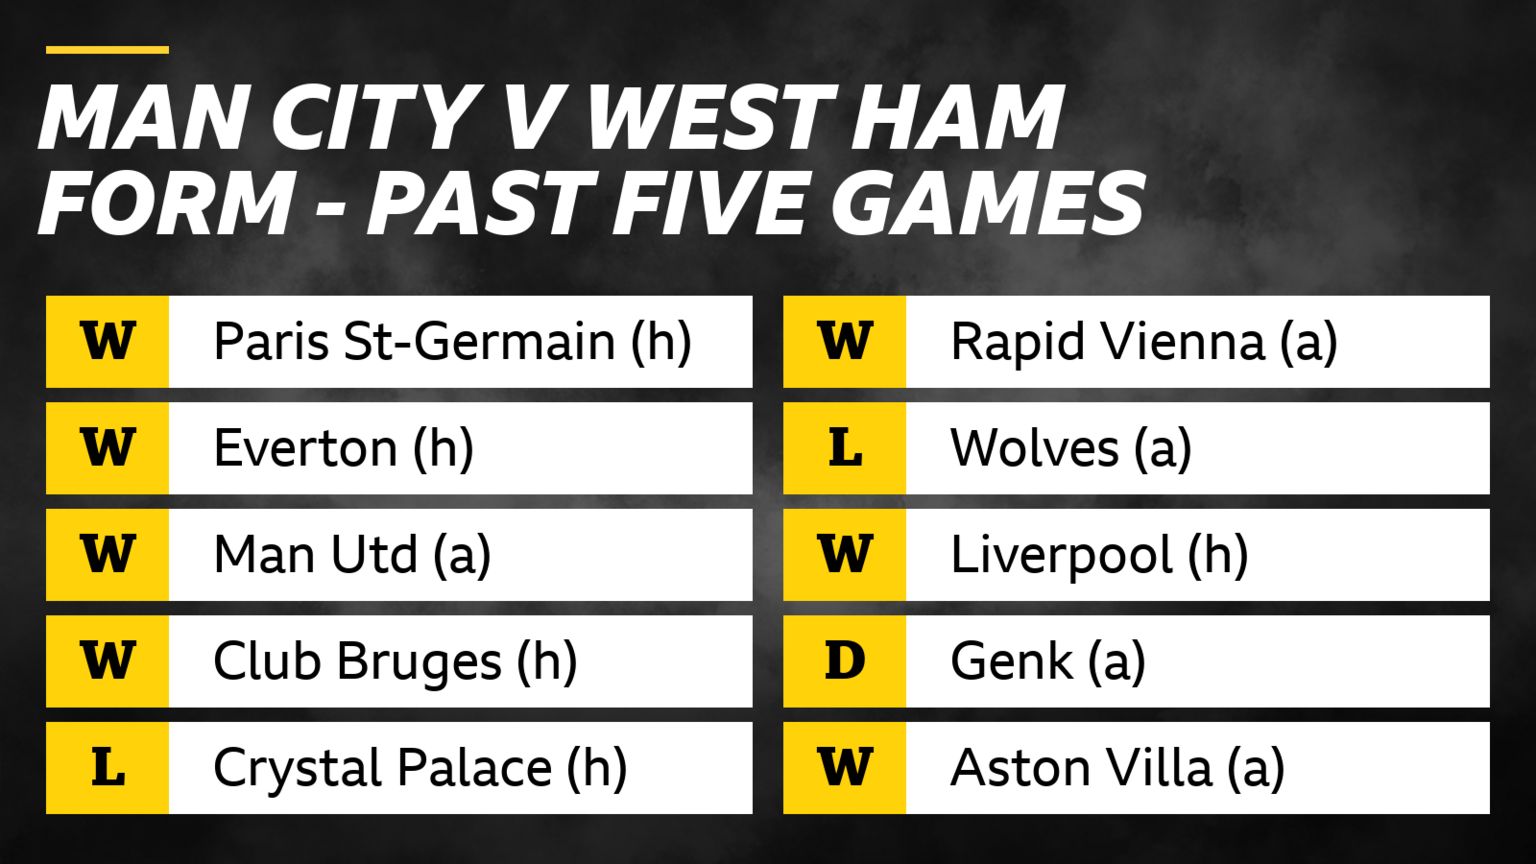 Man City past five games: PSG (won), Everton (won), man utd (won), Club Burges (won), Crystal Palace (lost); West Ham past five games: Rapid Vienna (won), Wolves (lost), Liverpool (won), Genk (drew), Aston Villa (won)